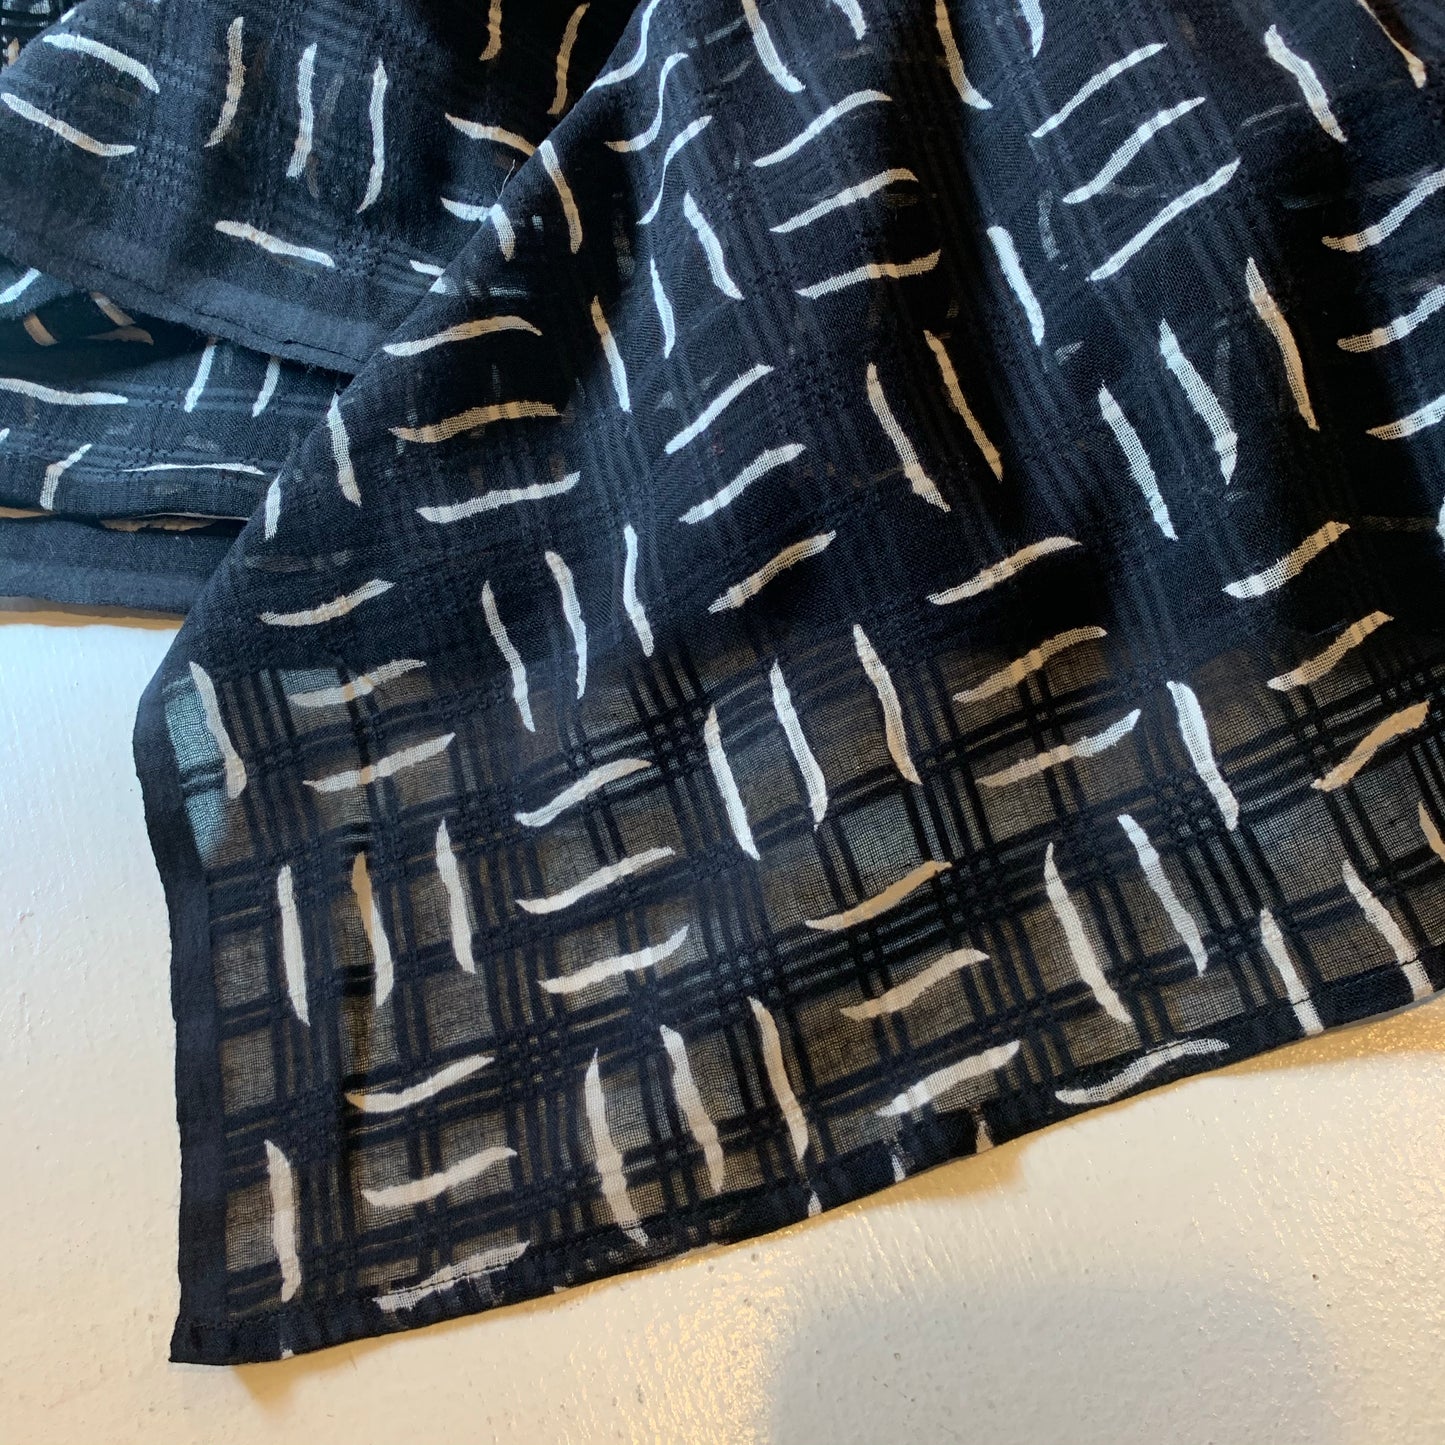 Maelu Designs Oversize scarf Alys print